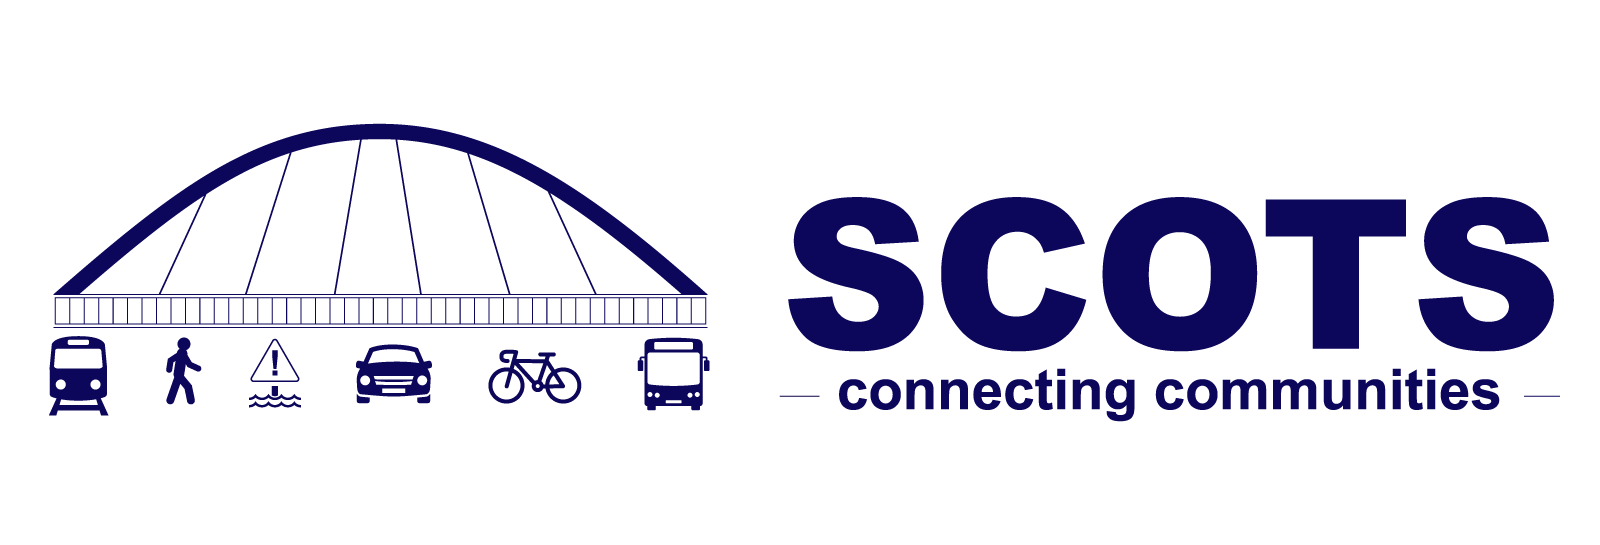 SCOTS logo banner image